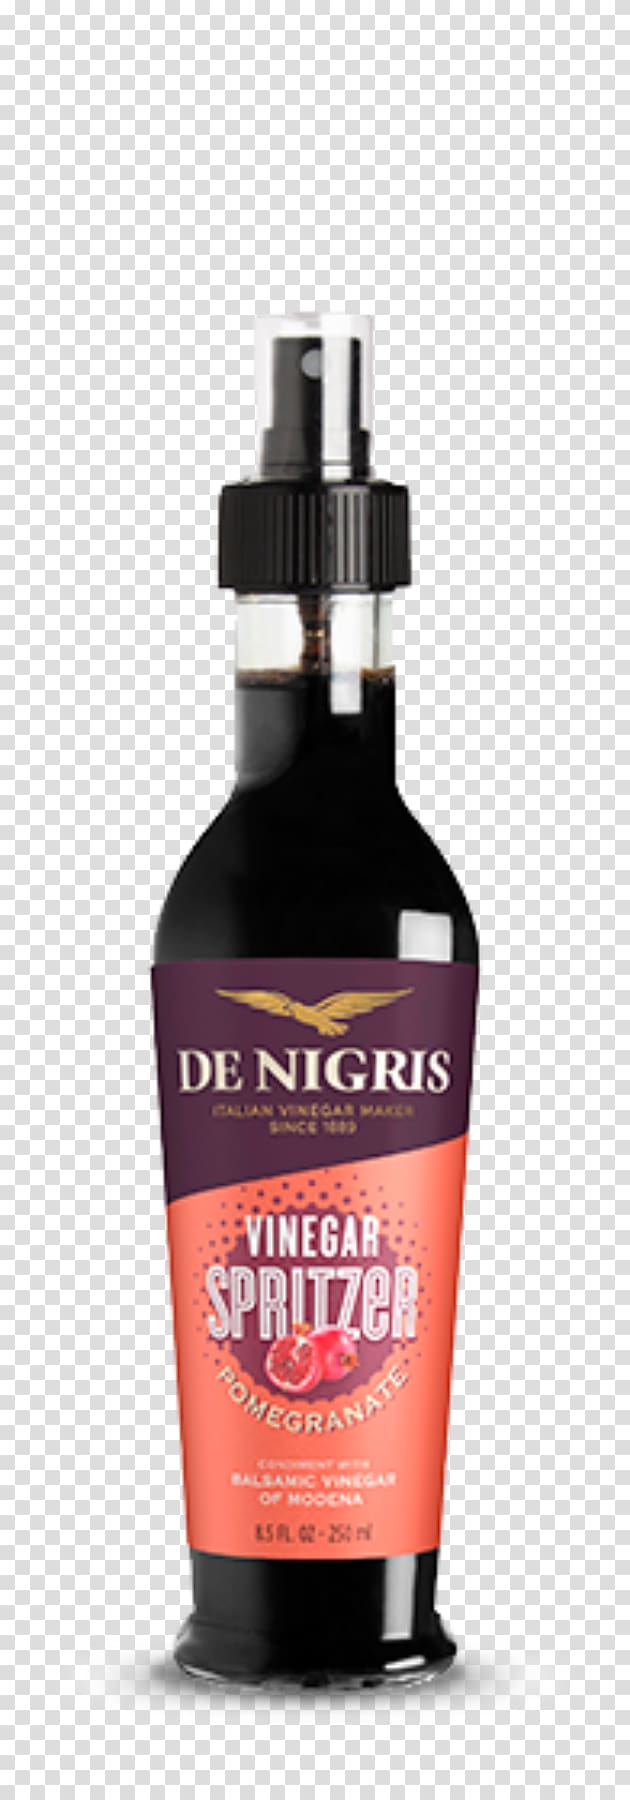 Spritzer Raspberry vinegar Wine Vinaigrette Italian cuisine, Pomegranate sauce transparent background PNG clipart